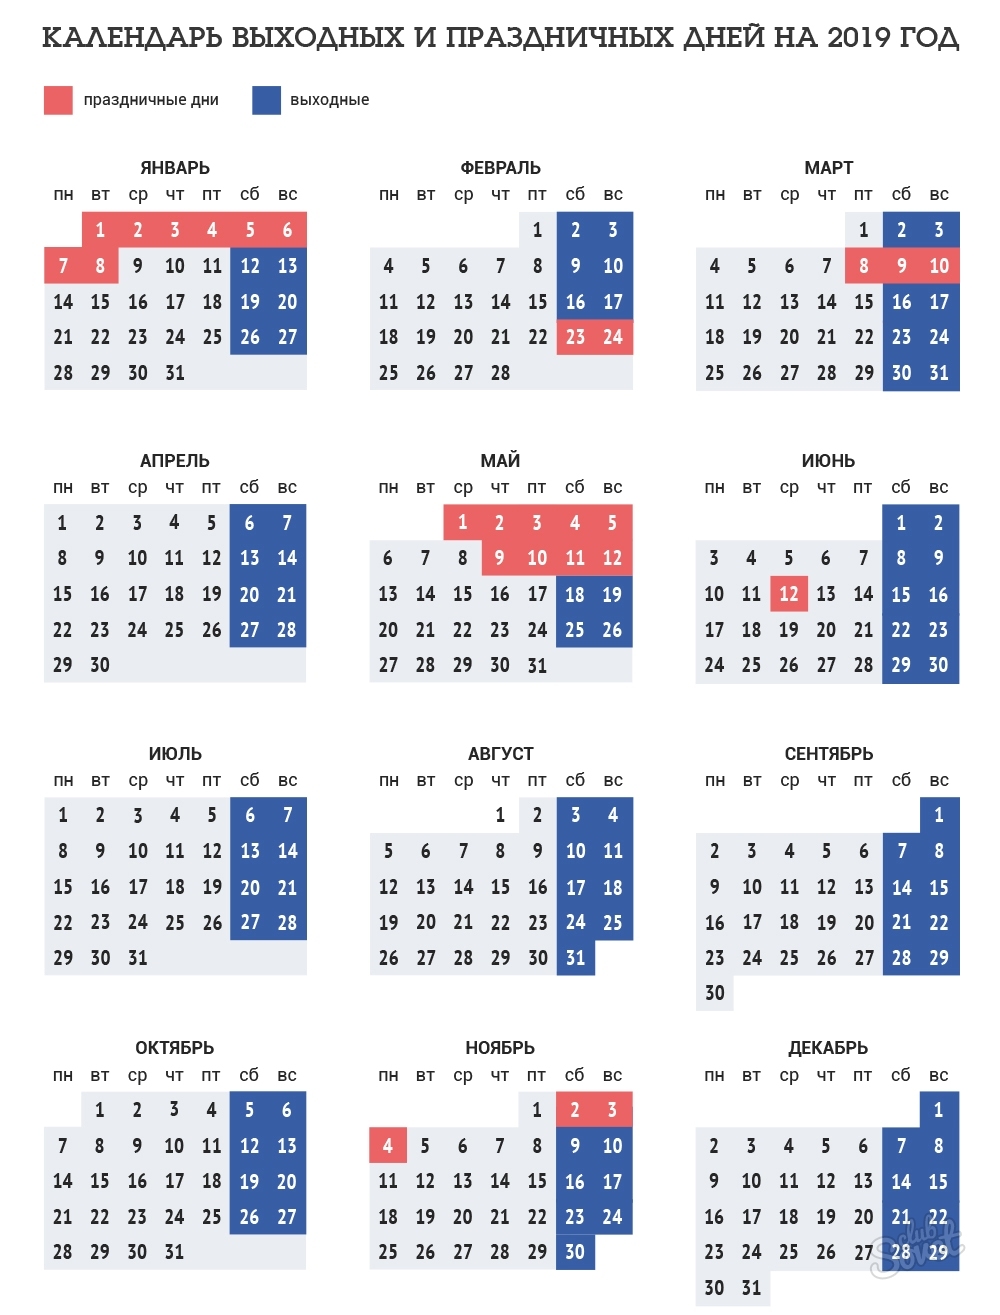 Kalendarz weekendowy i święta 2019